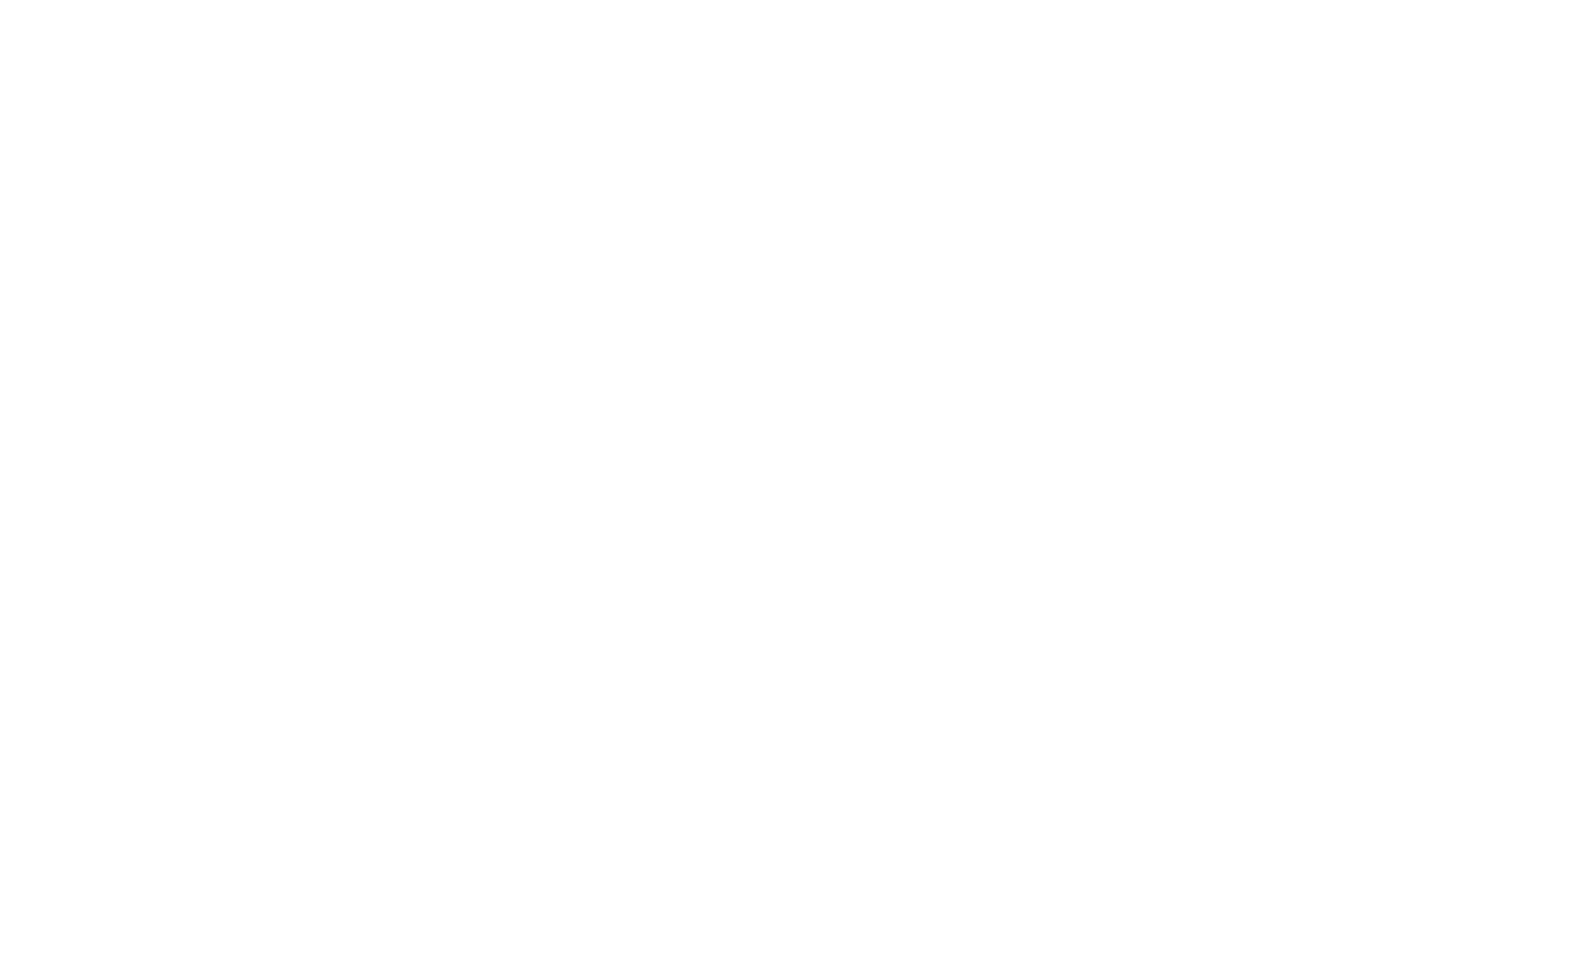 Member Lifestyle Health Plans